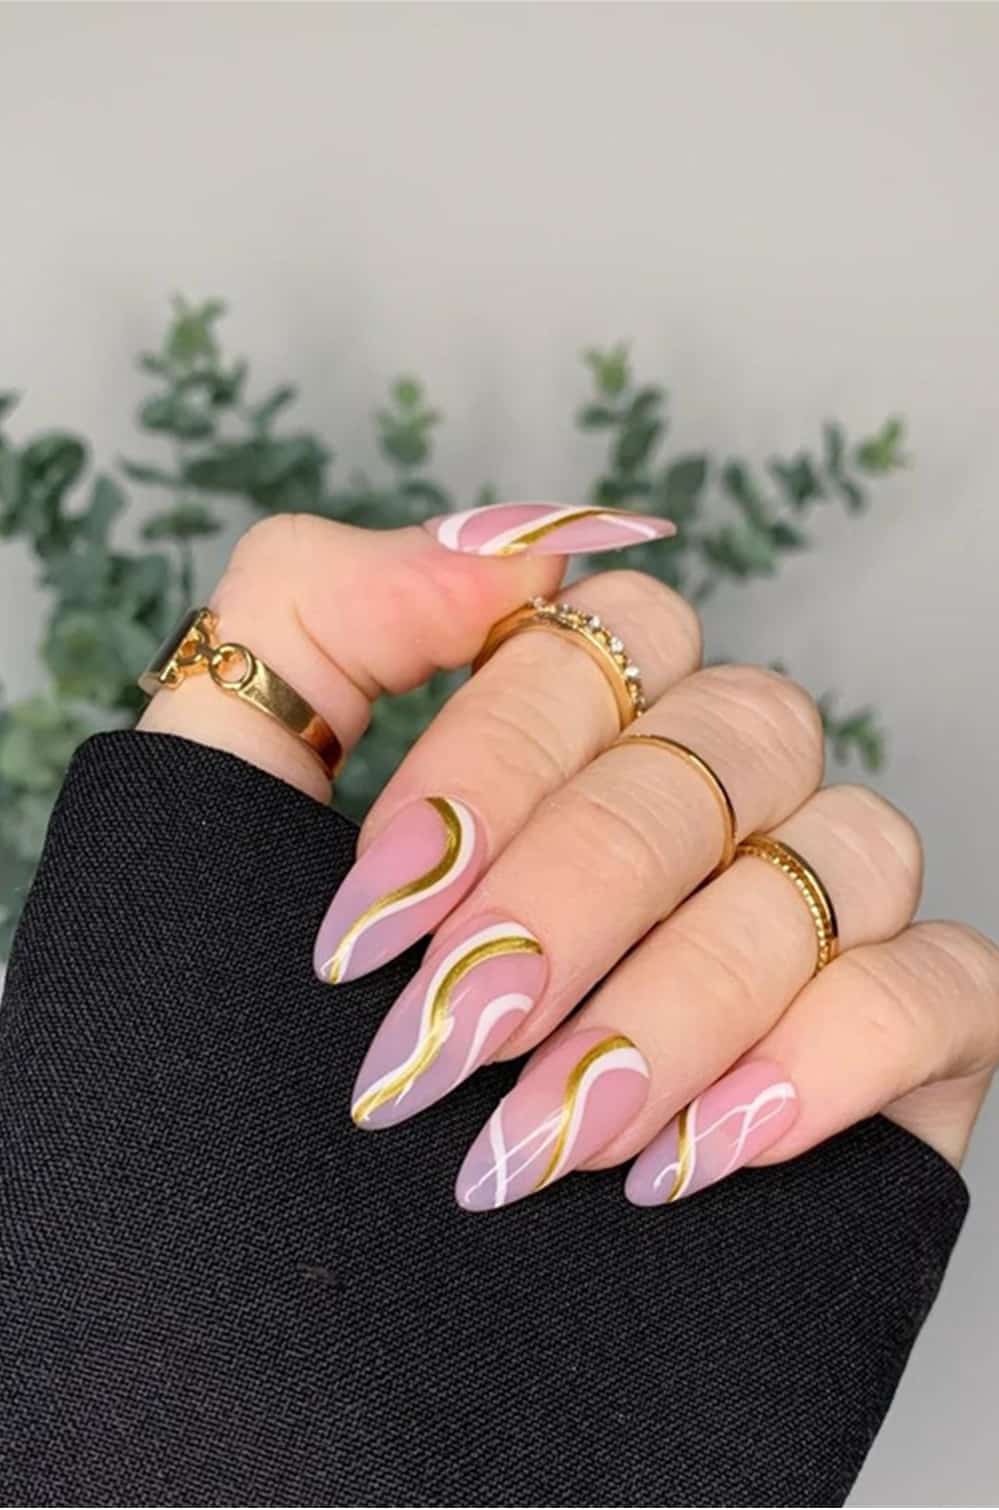 golden nails